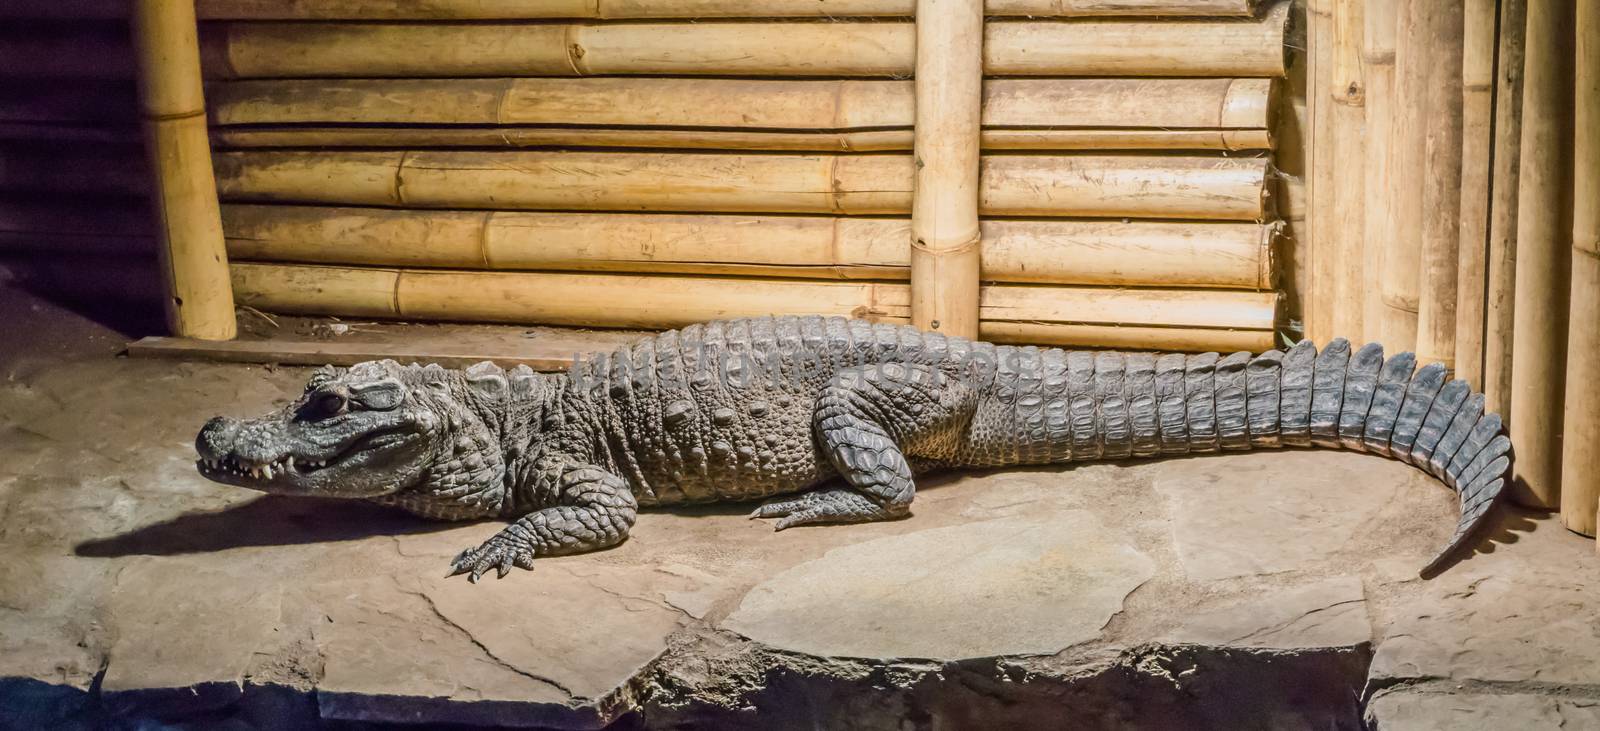 Adult african dwarf or bony crocodile sitting on a rock dangerous wildlife animal portrait by charlottebleijenberg